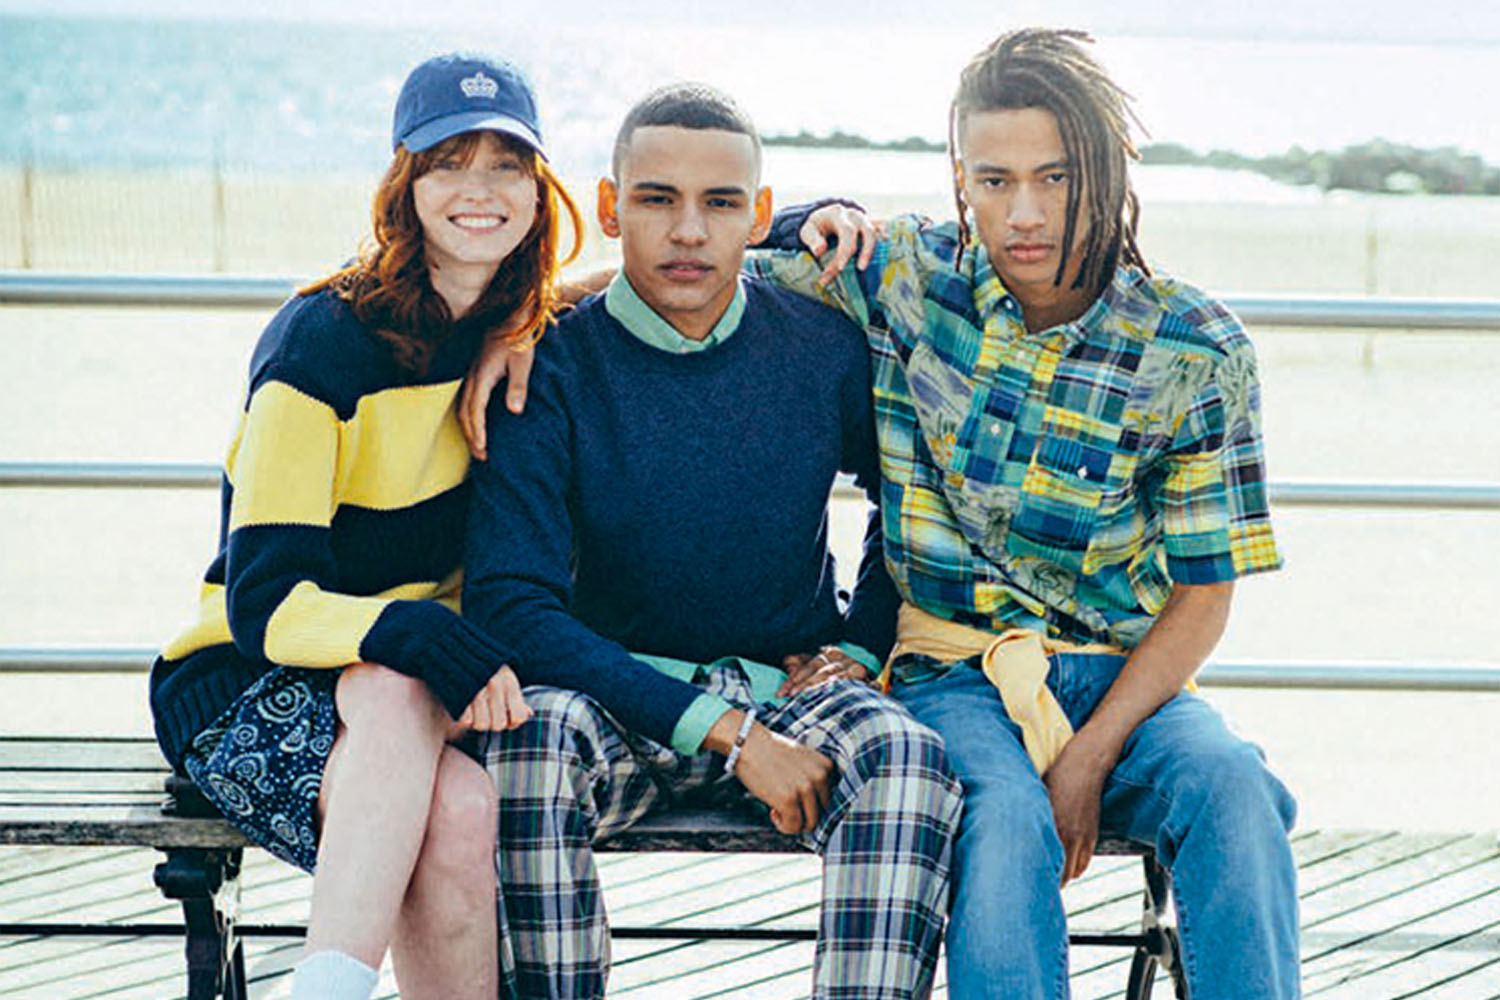 Three models in J.Press clothing